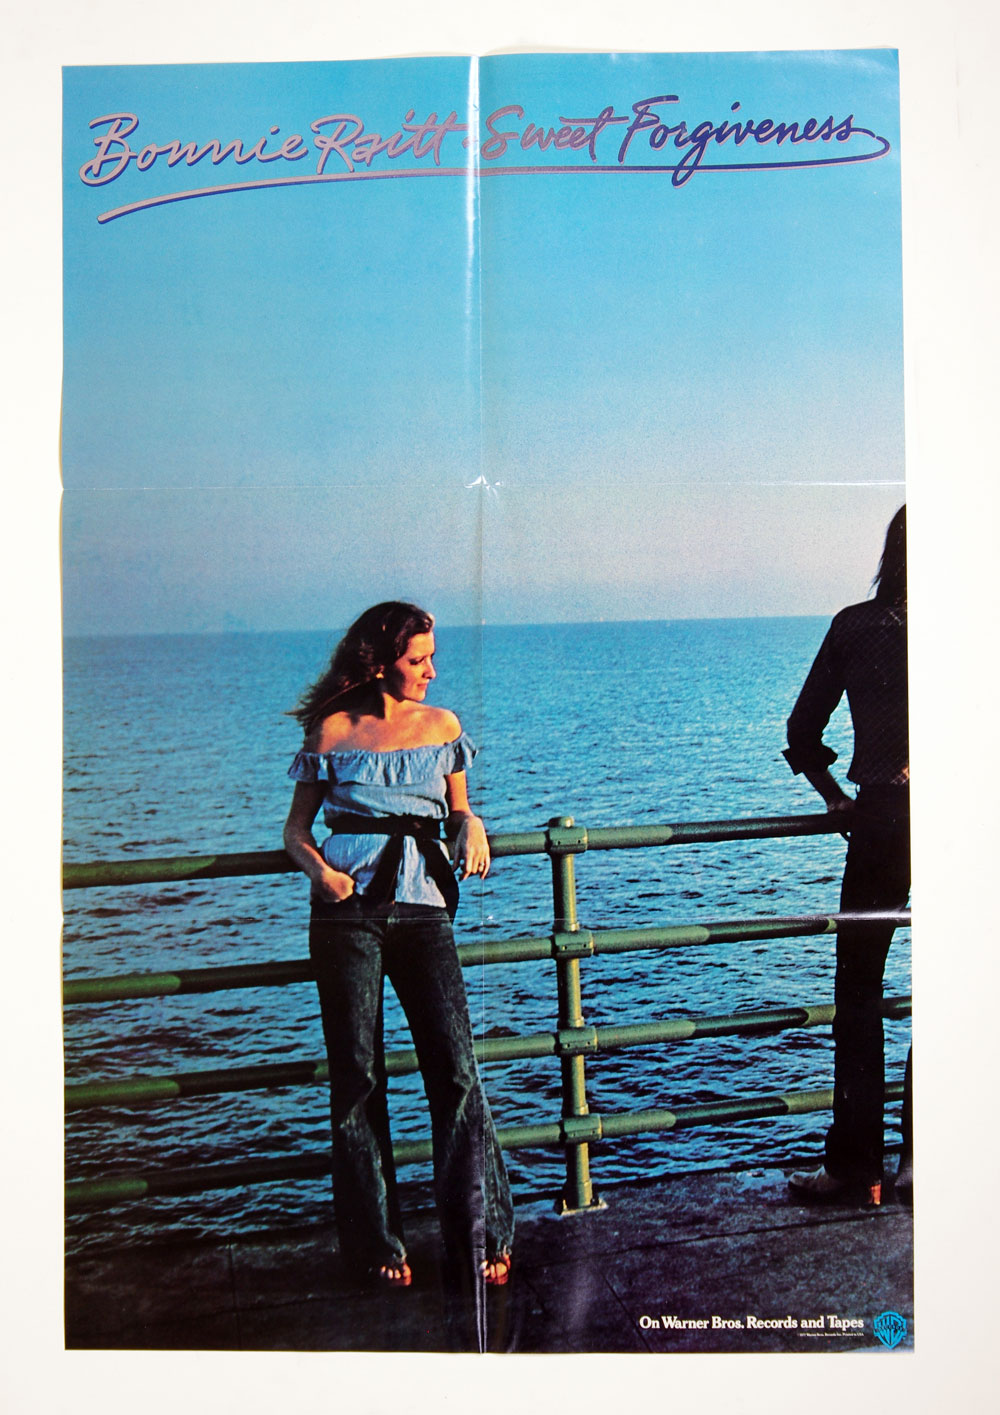 Bonnie Raitt Poster 1977 Sweet Forgiveness New Album Promotion